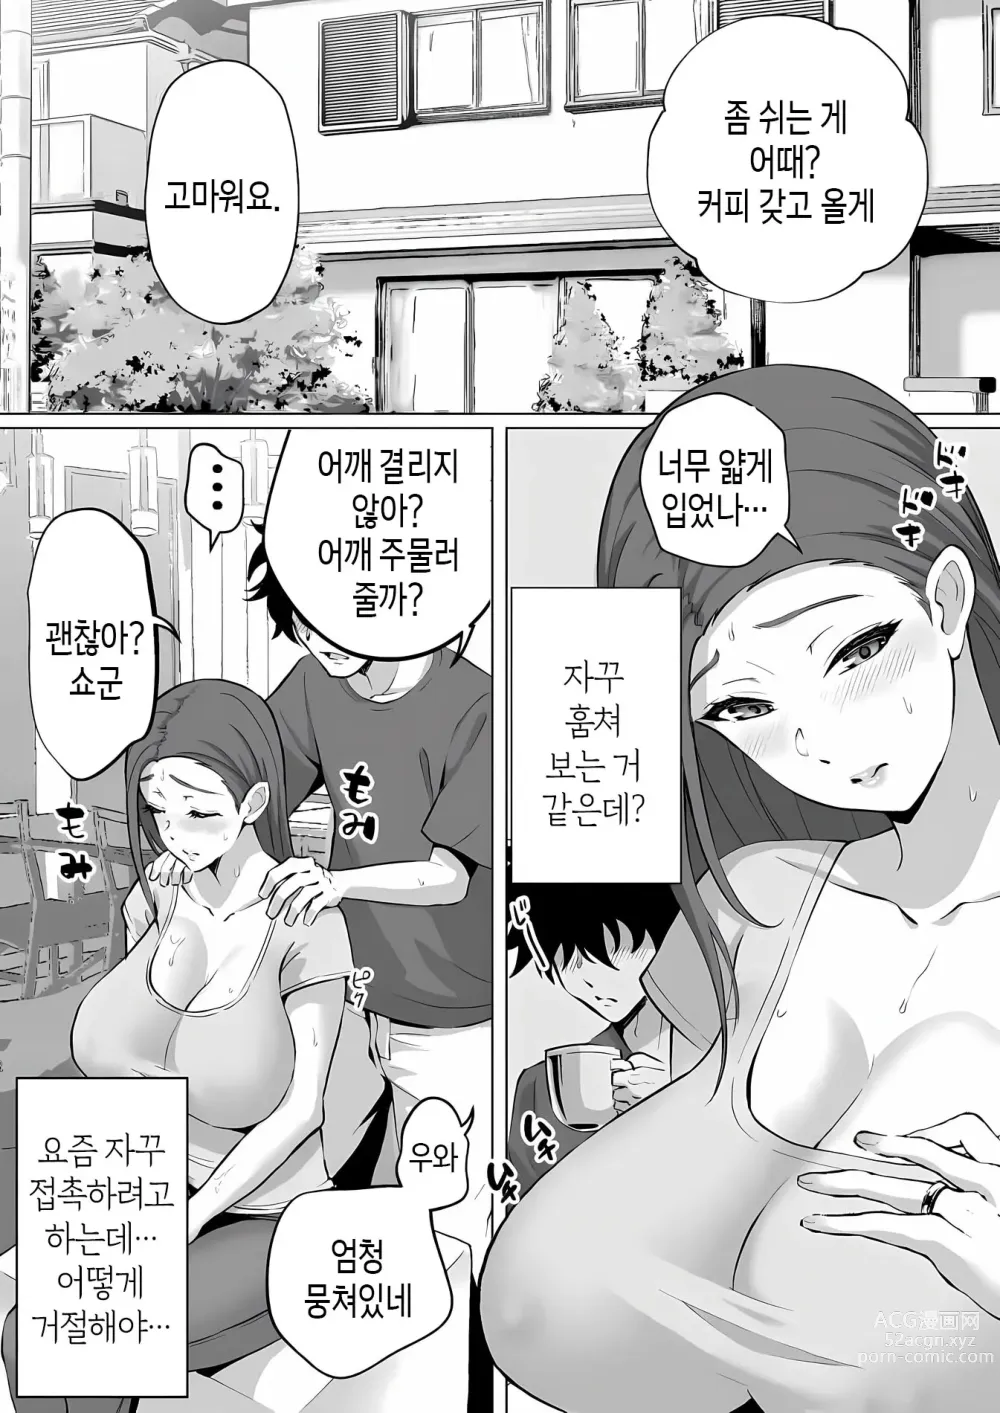 Page 13 of doujinshi 폭유 엄마는 절륜의 아들을 공부에 집중시키기 위해 몸으로 개운하게 한다